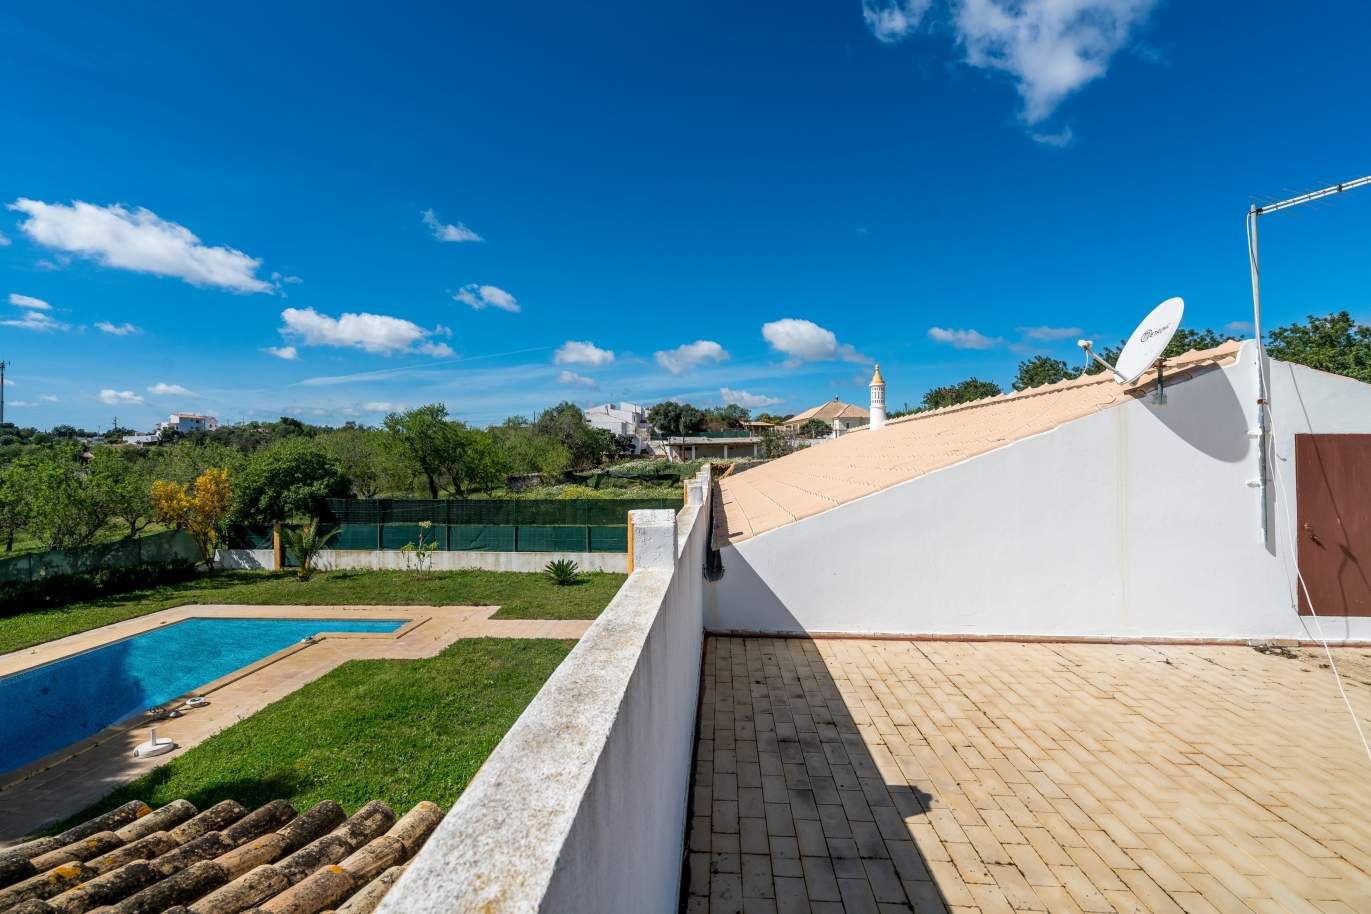 Sale of villa with pool in Boliqueime, Loulé, Algarve, Portugal_98528